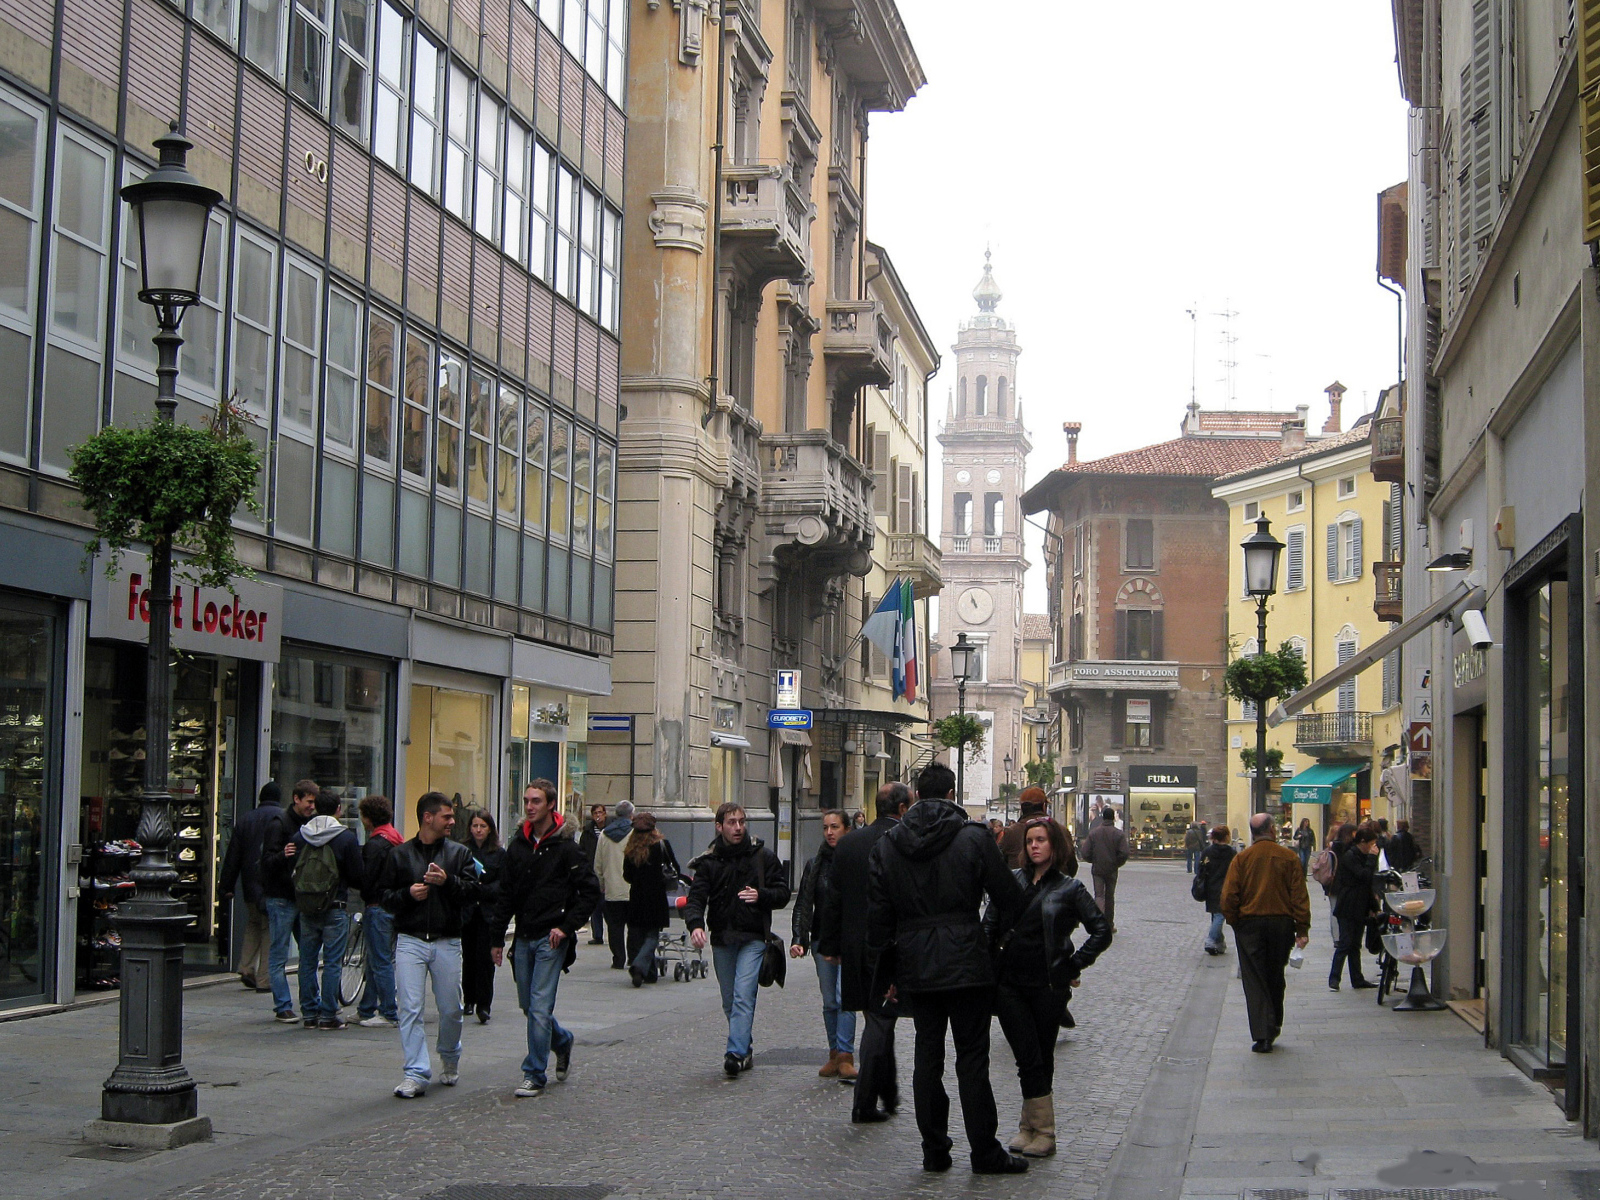 Прогулка по улице в Парме, Италия